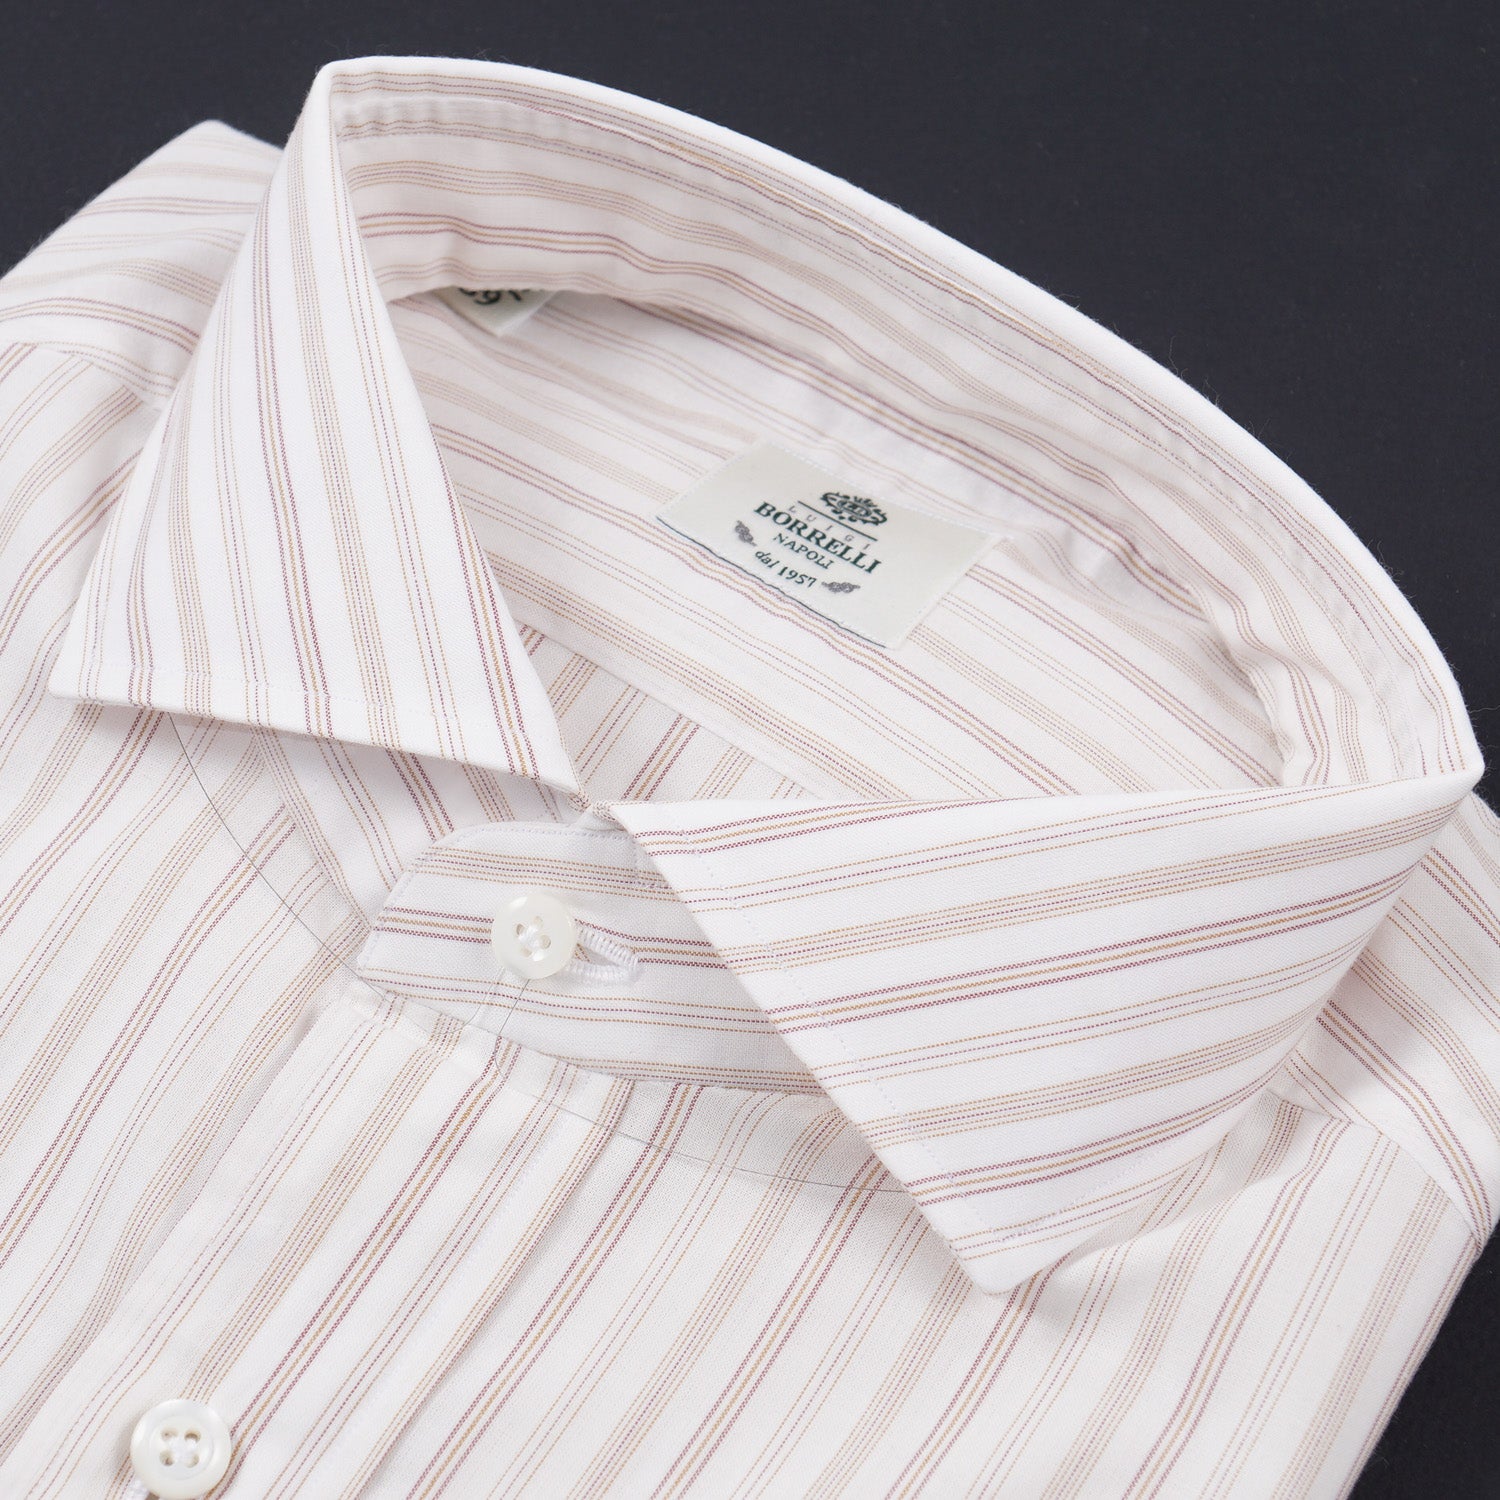 Luigi Borrelli Striped Cotton Dress Shirt - Top Shelf Apparel